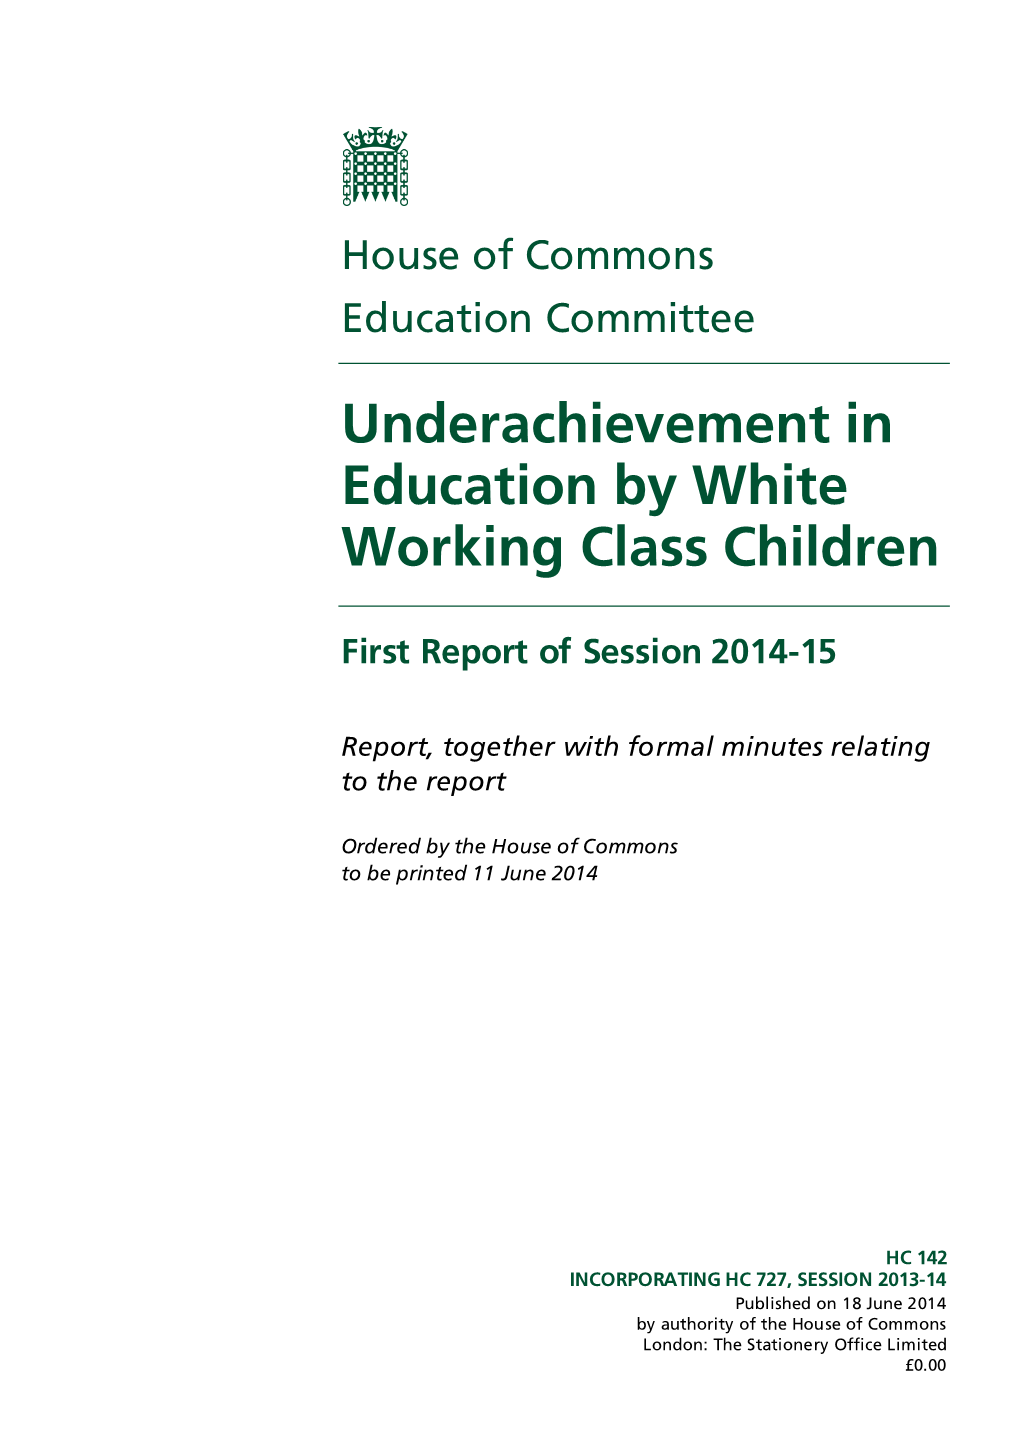 Underachievement in Education by White Working Class Children